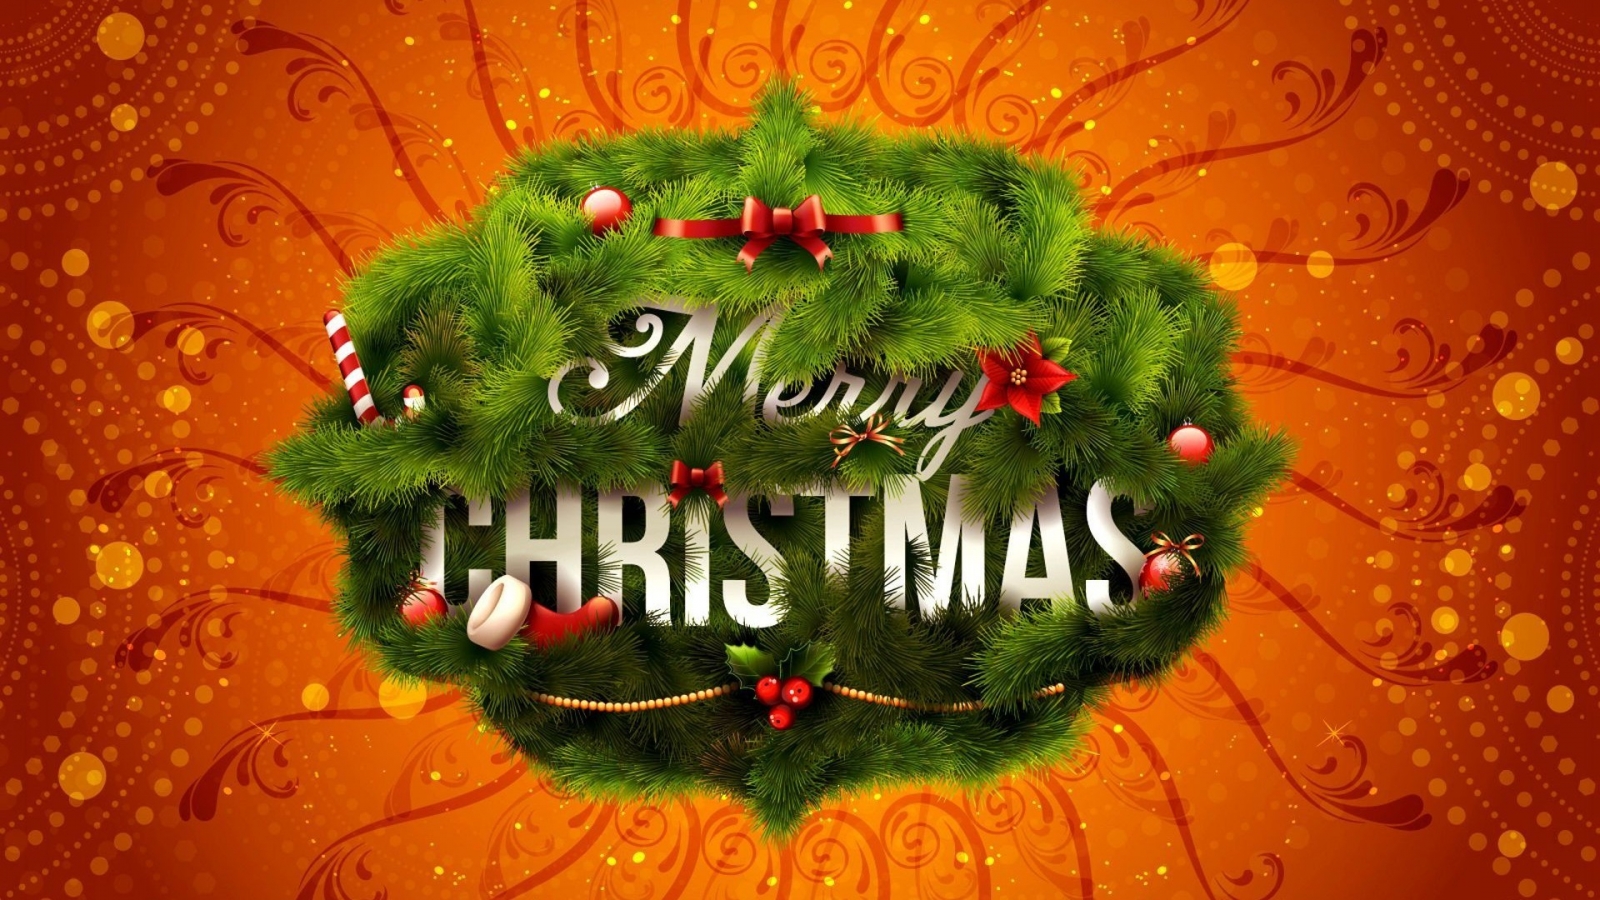 Merry Christmas Wreath for 1600 x 900 HDTV resolution